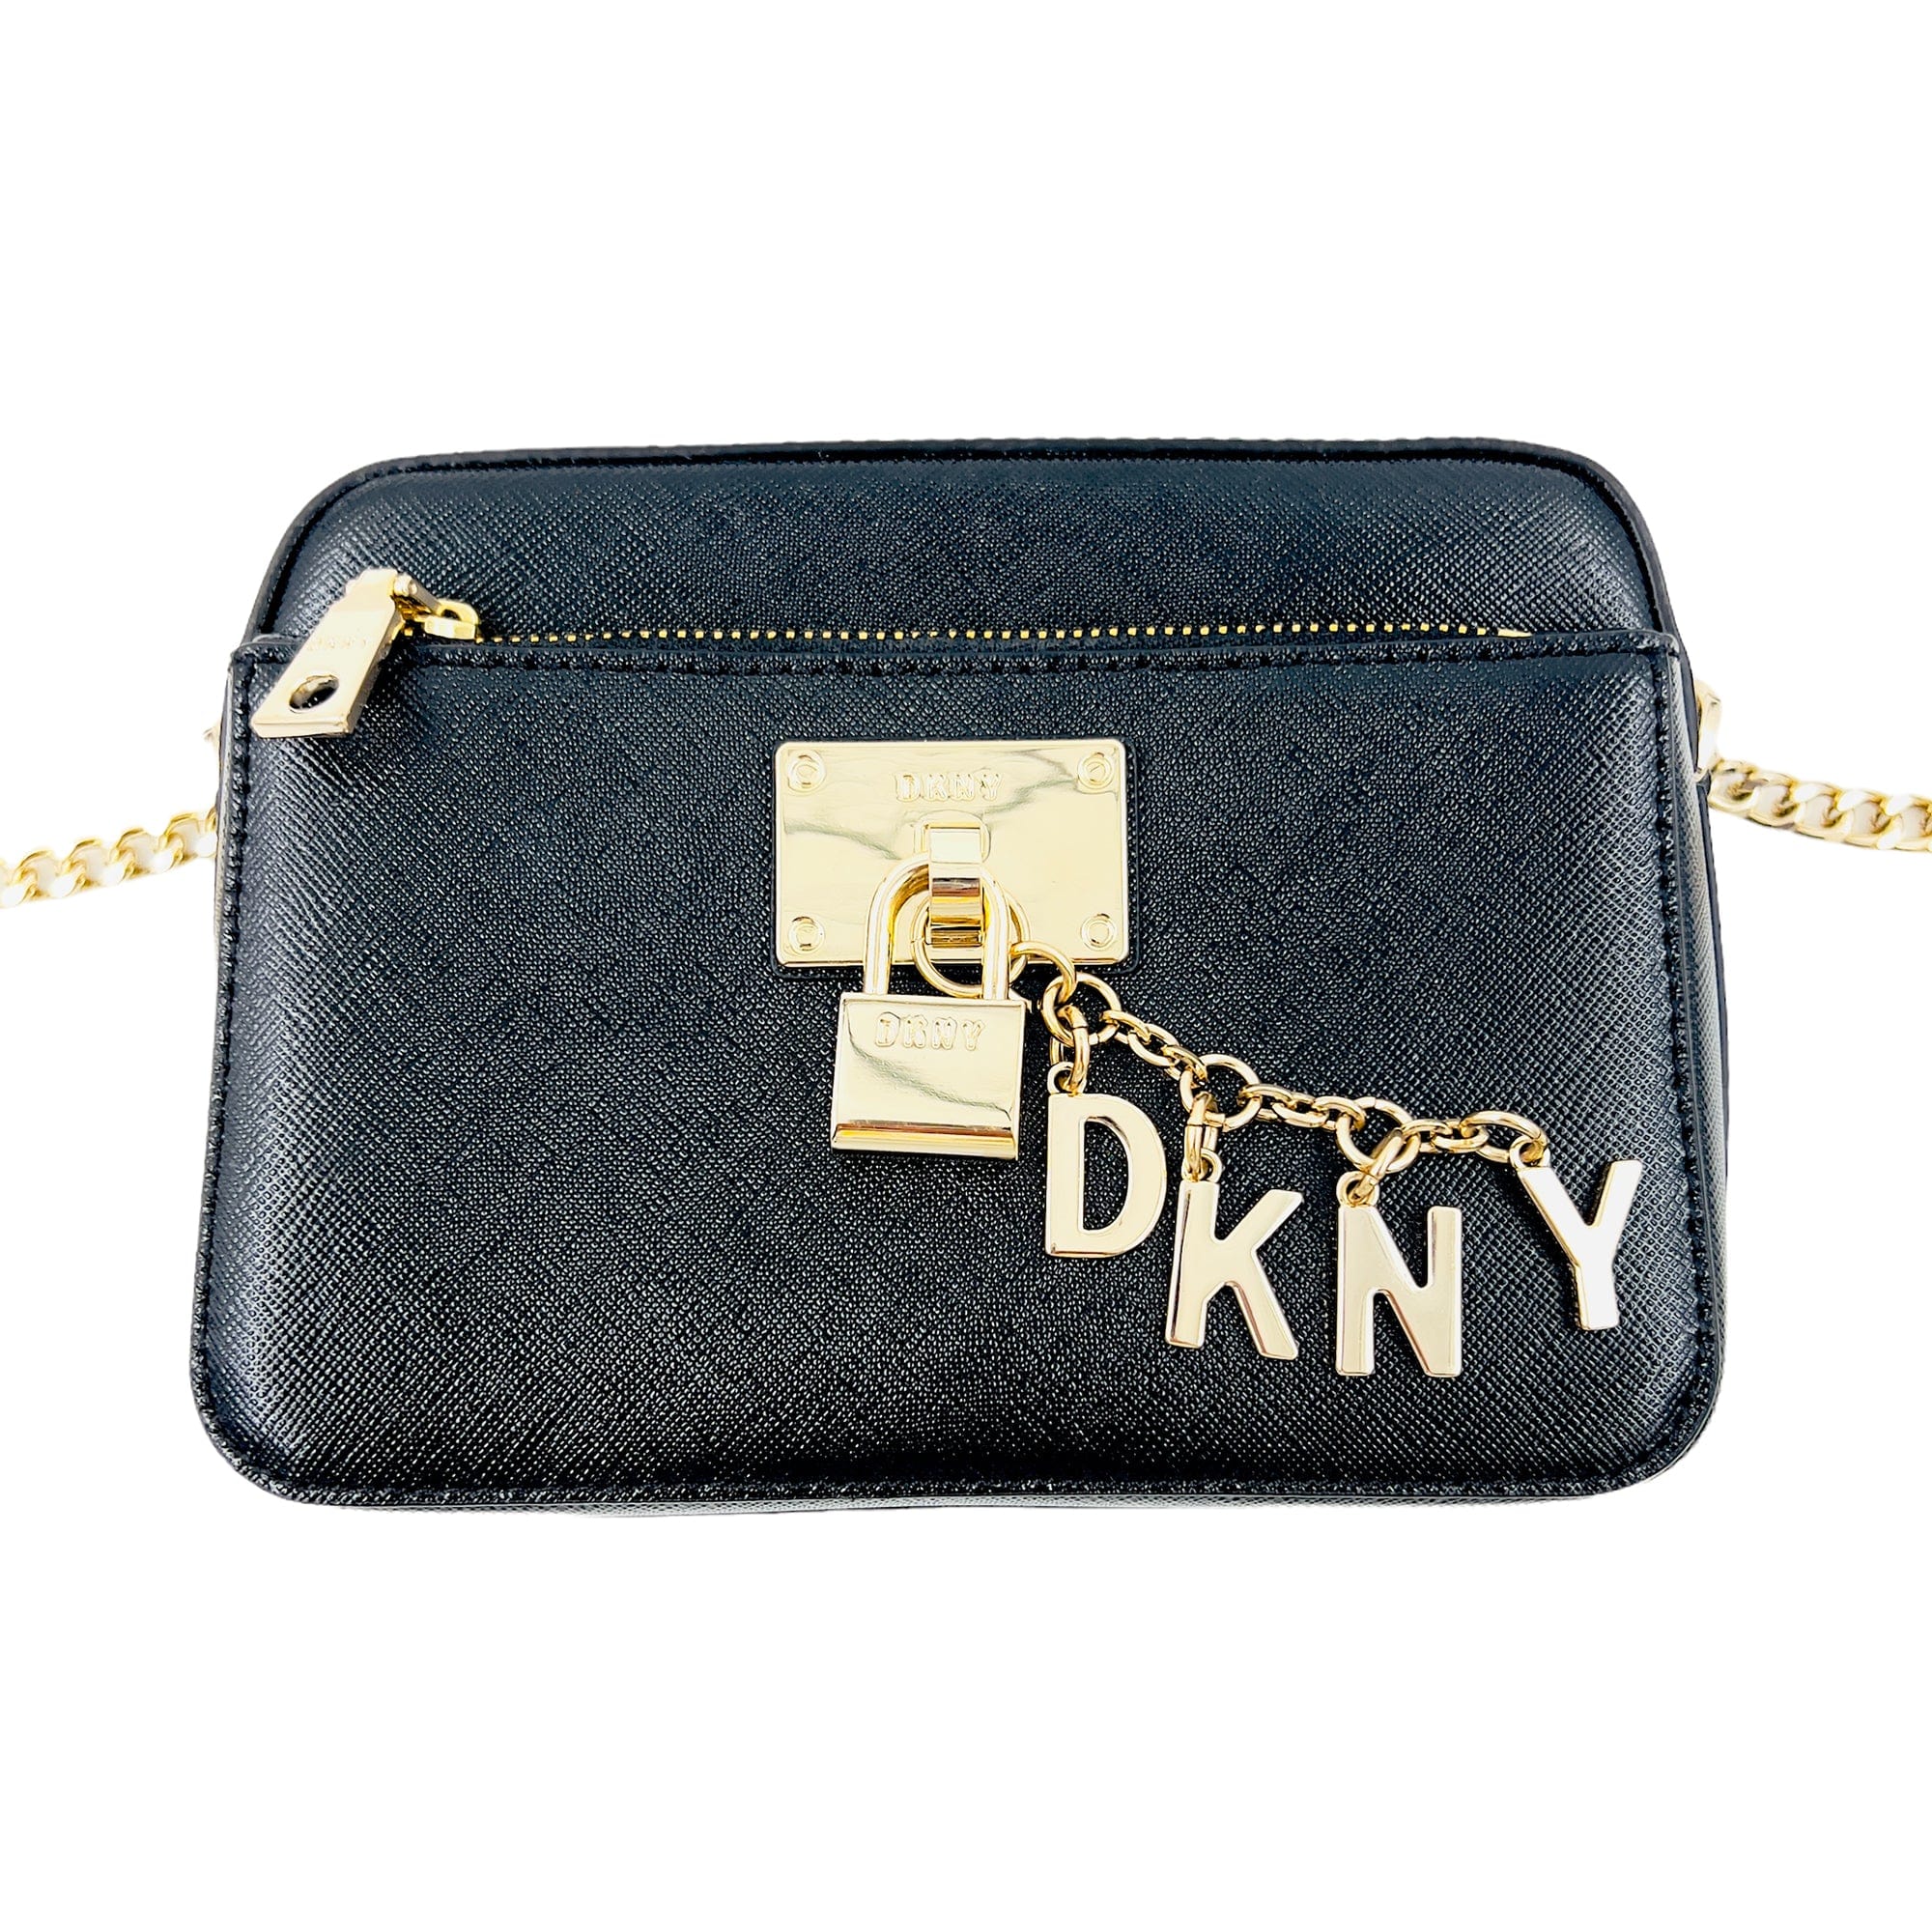 DKNY Elissa Pebble Leather Cross Body Bag, Black